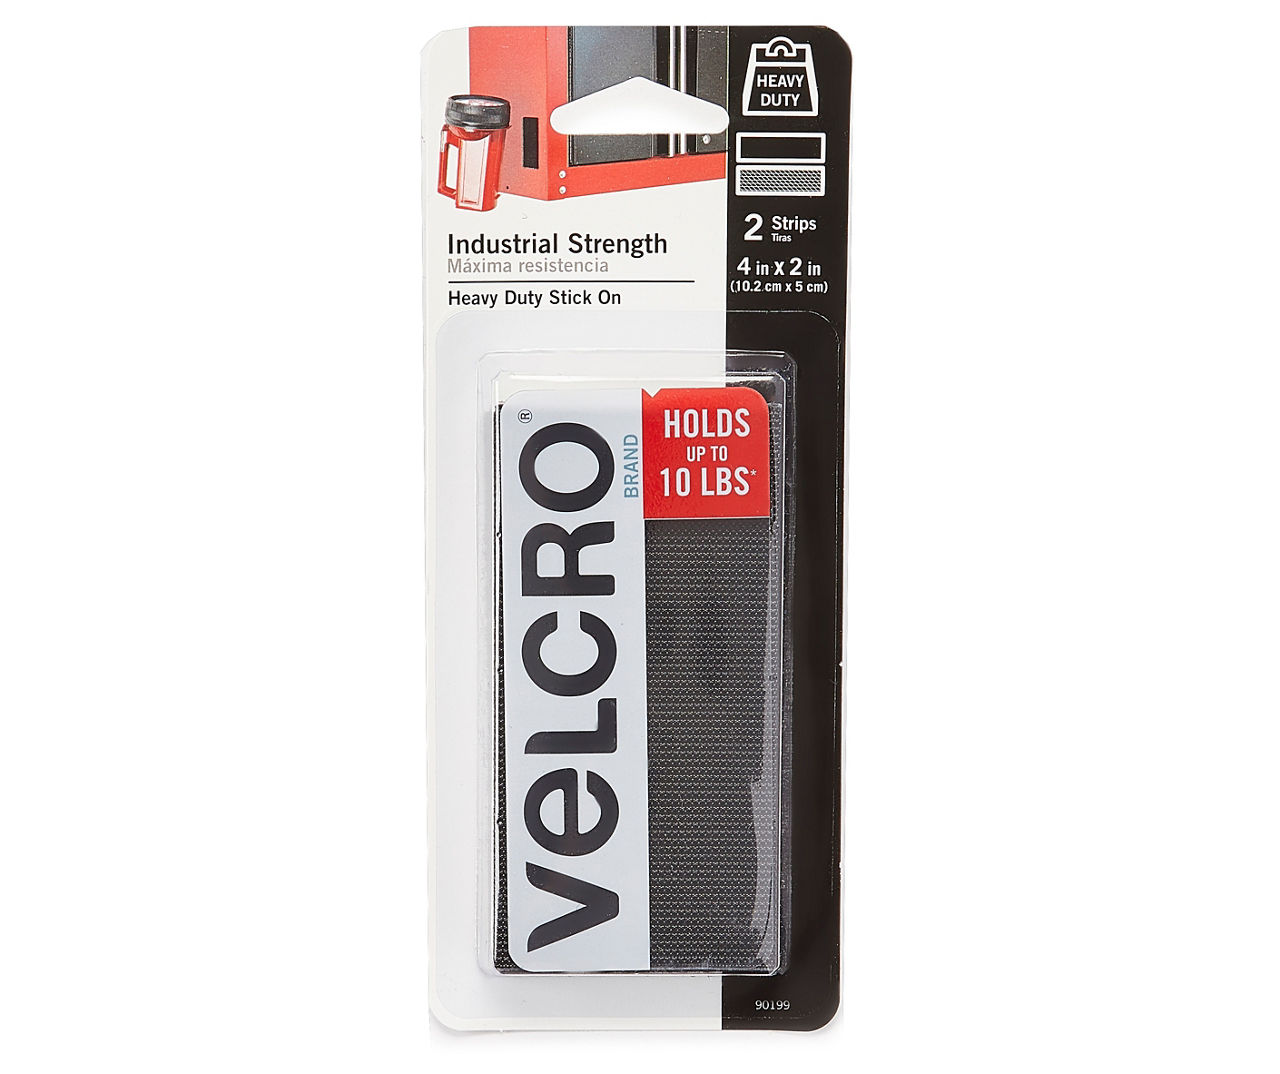 VELCRO Brand Industrial Strength, 15' x 2 Tape, Black 